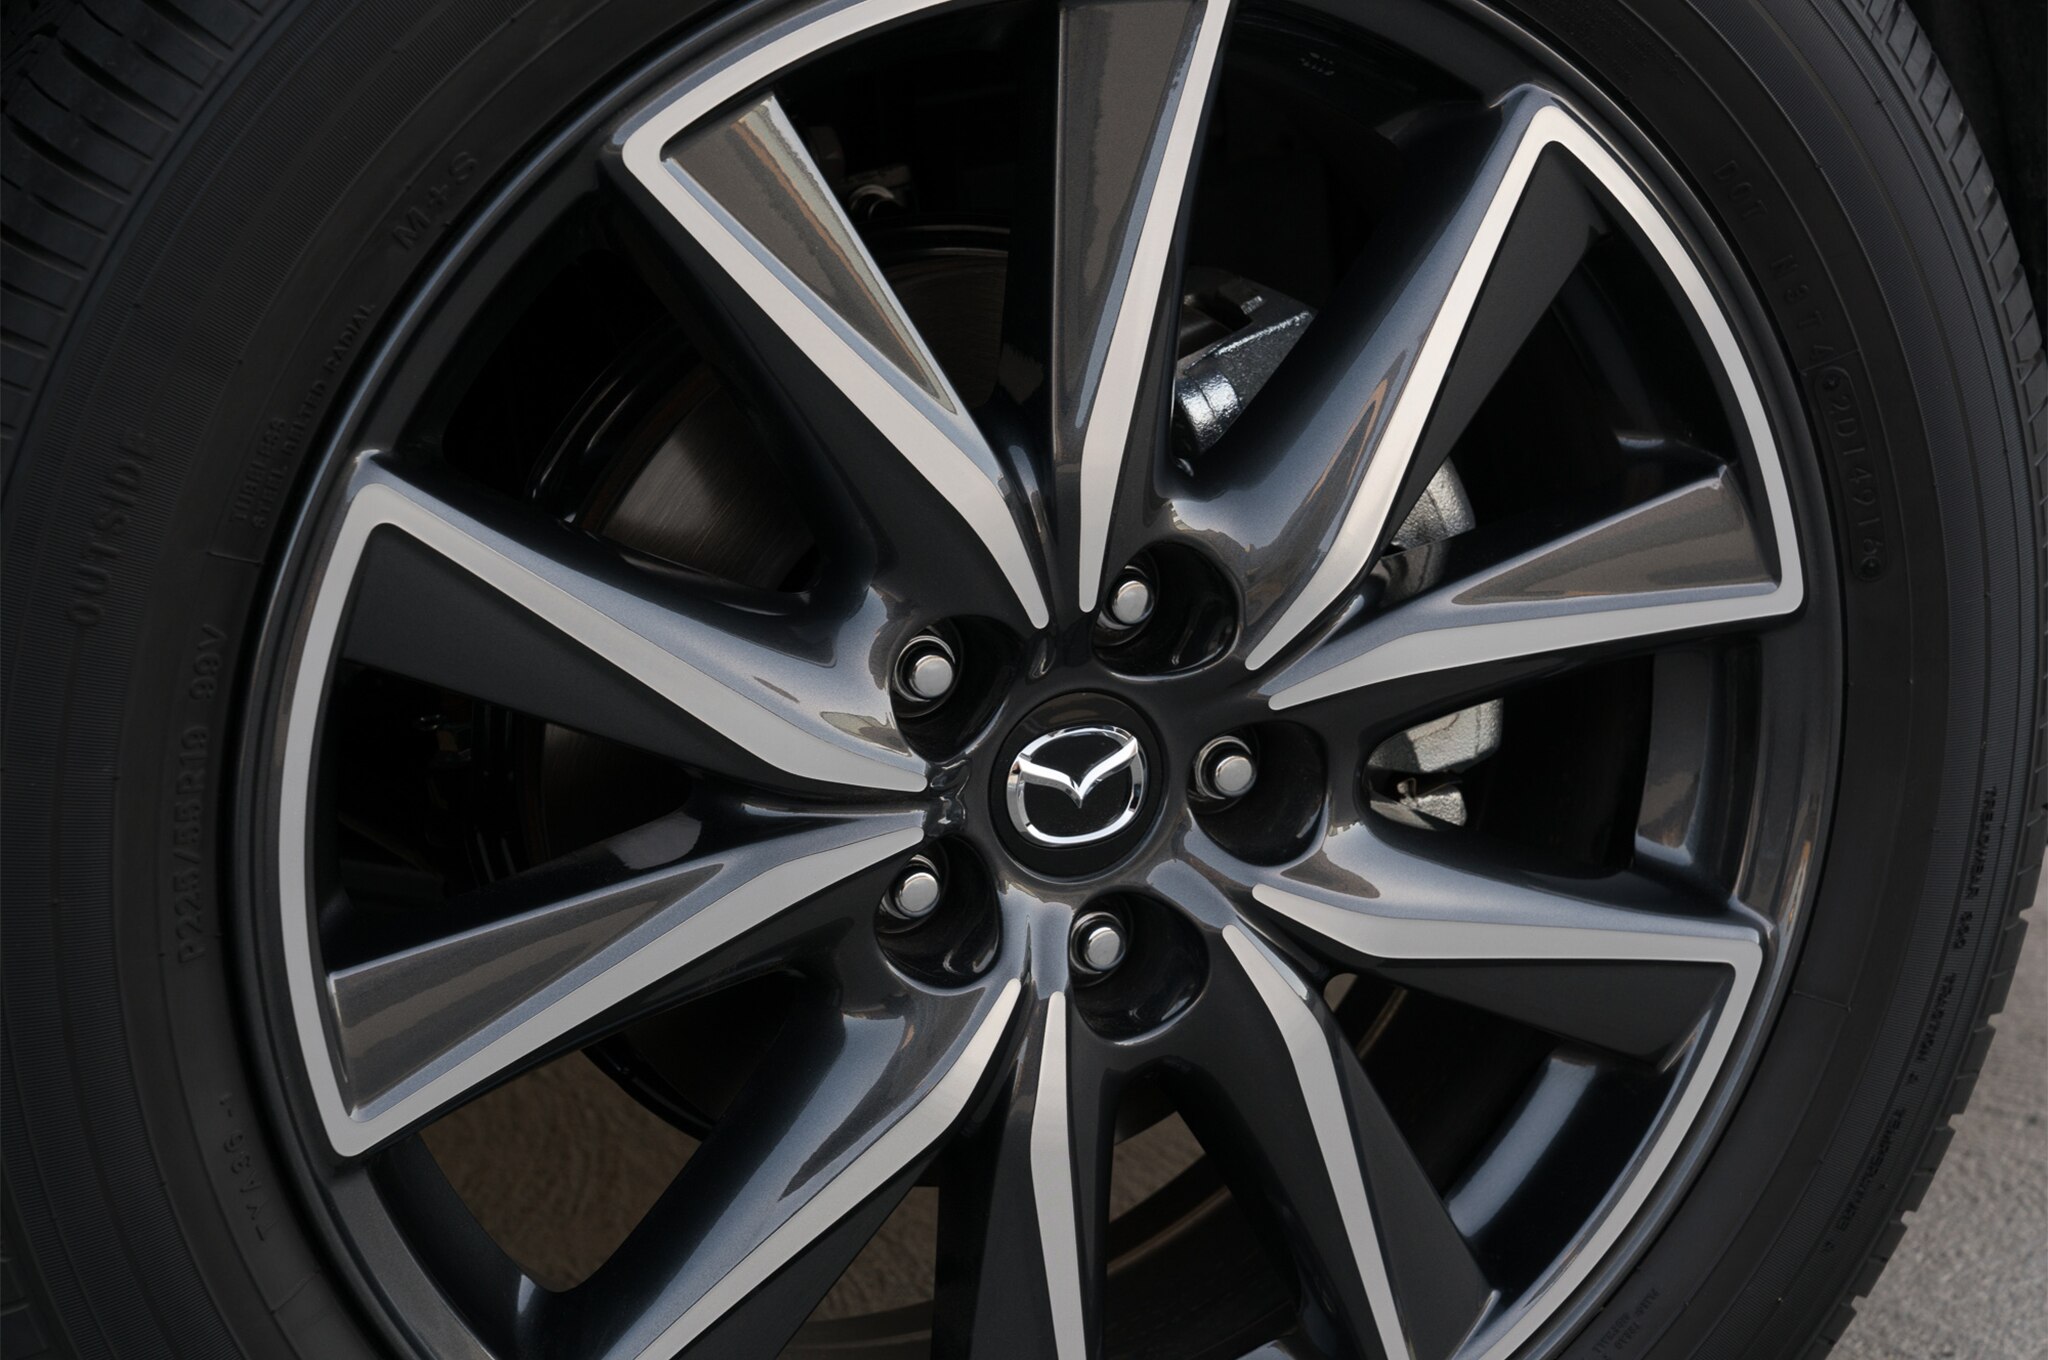 2017-Mazda-CX-5-wheels-02.jpg